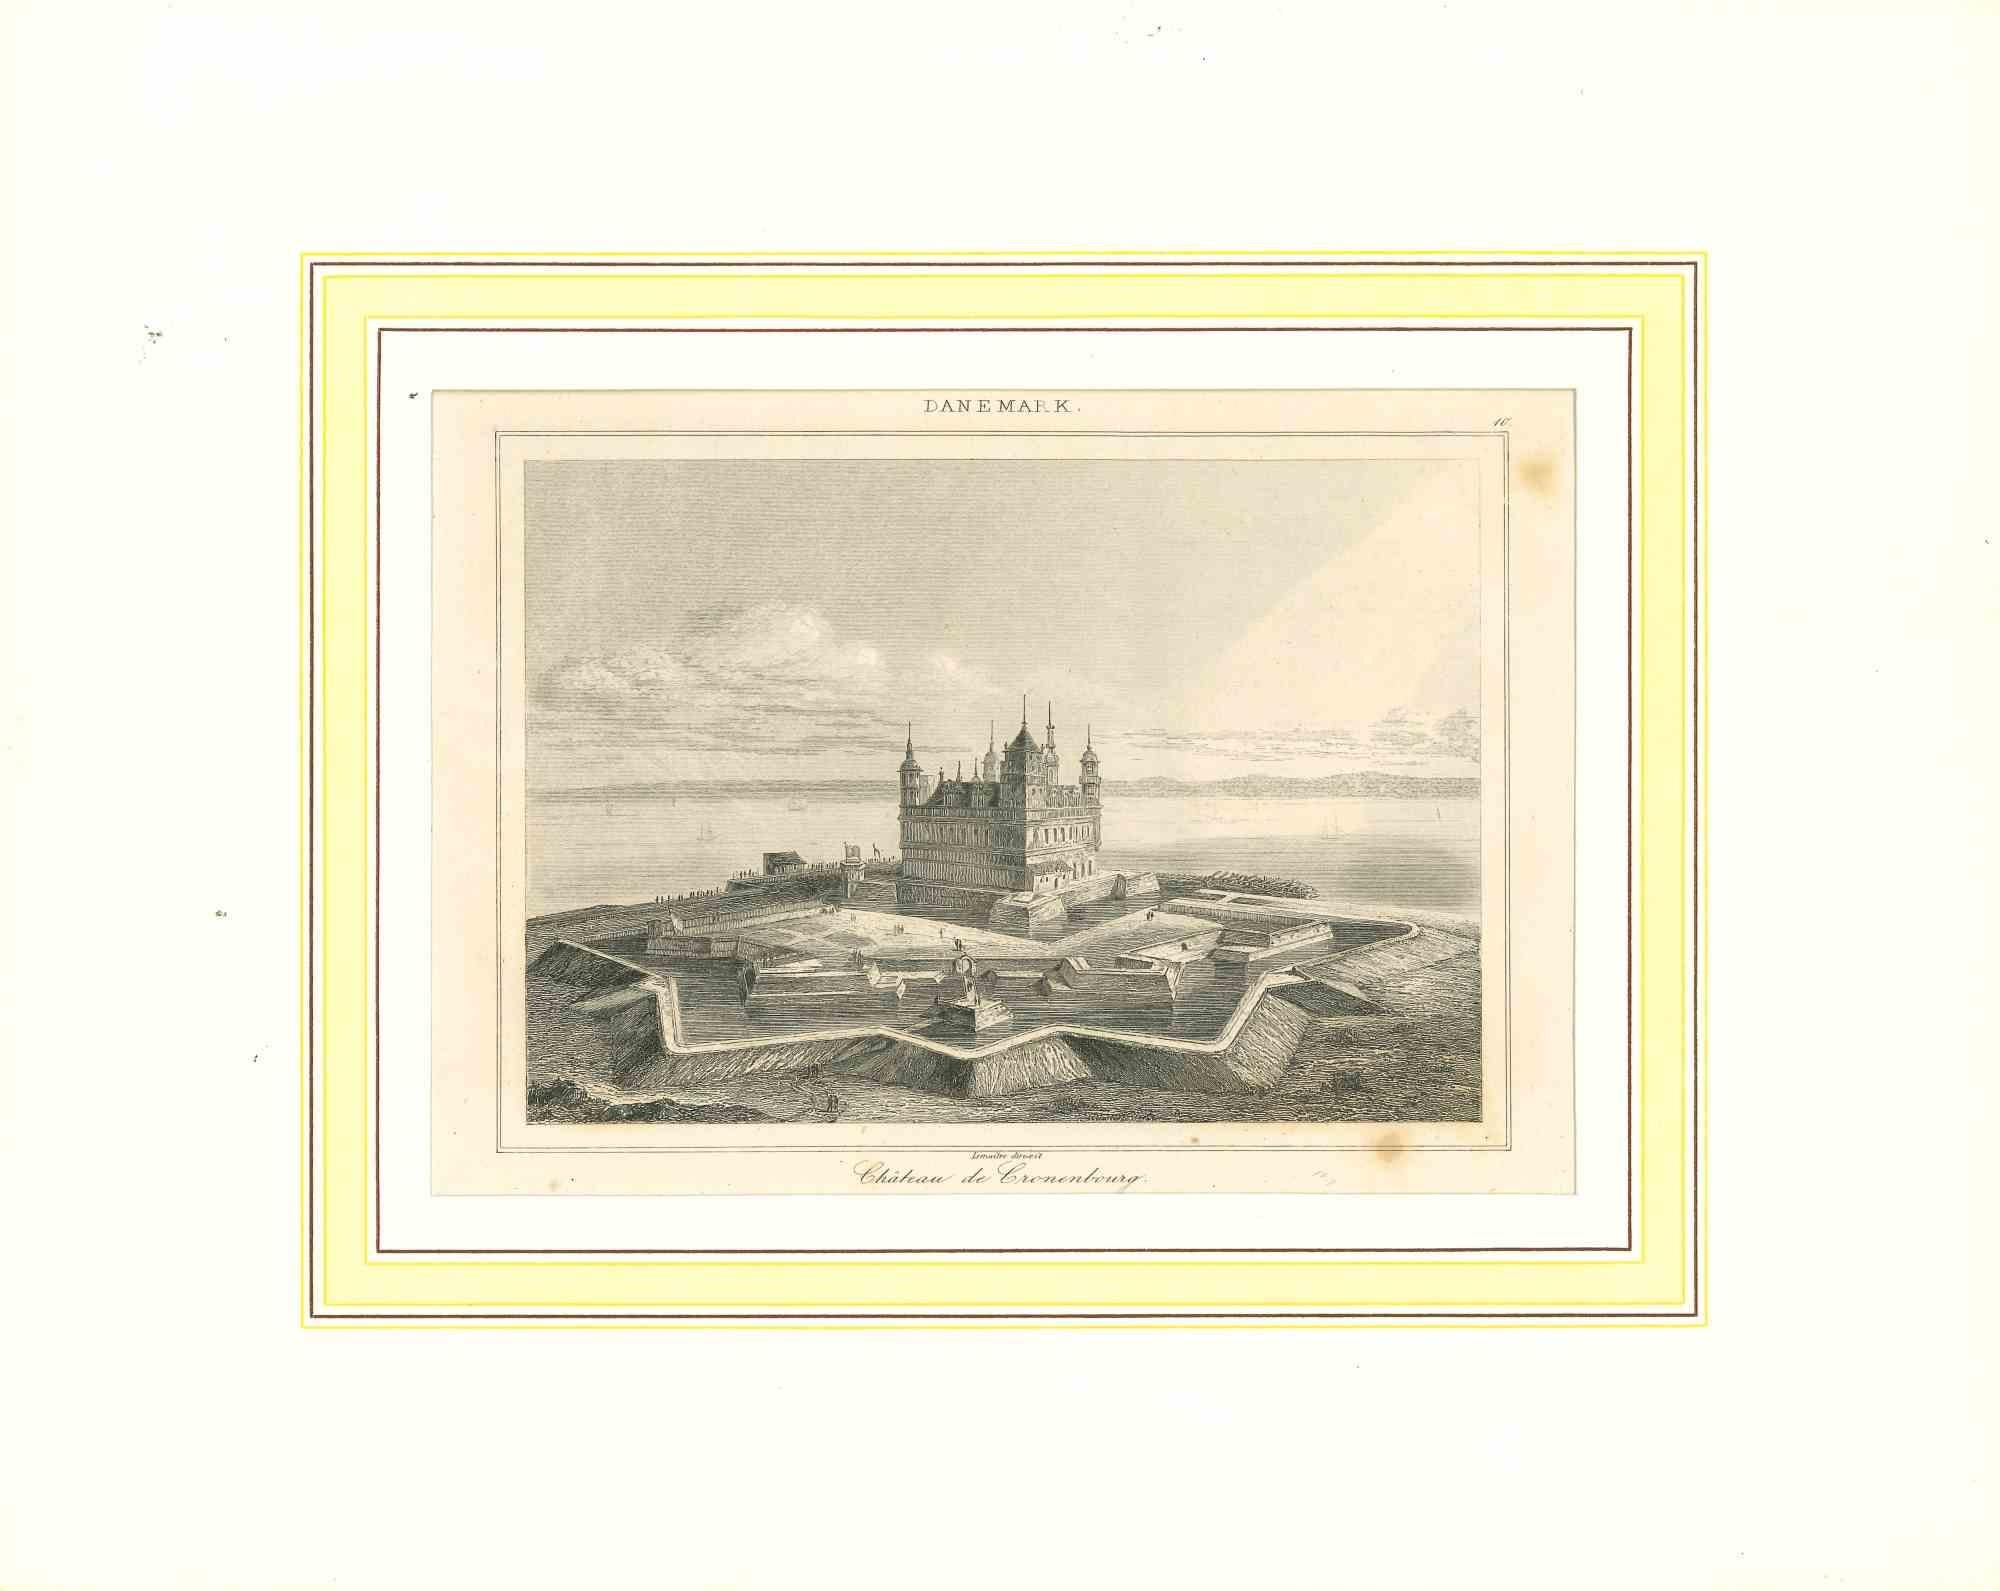 Unknown Landscape Print - Ancient View of Chateau de Chronenbourg-Original Lithograph - Early 19th Century